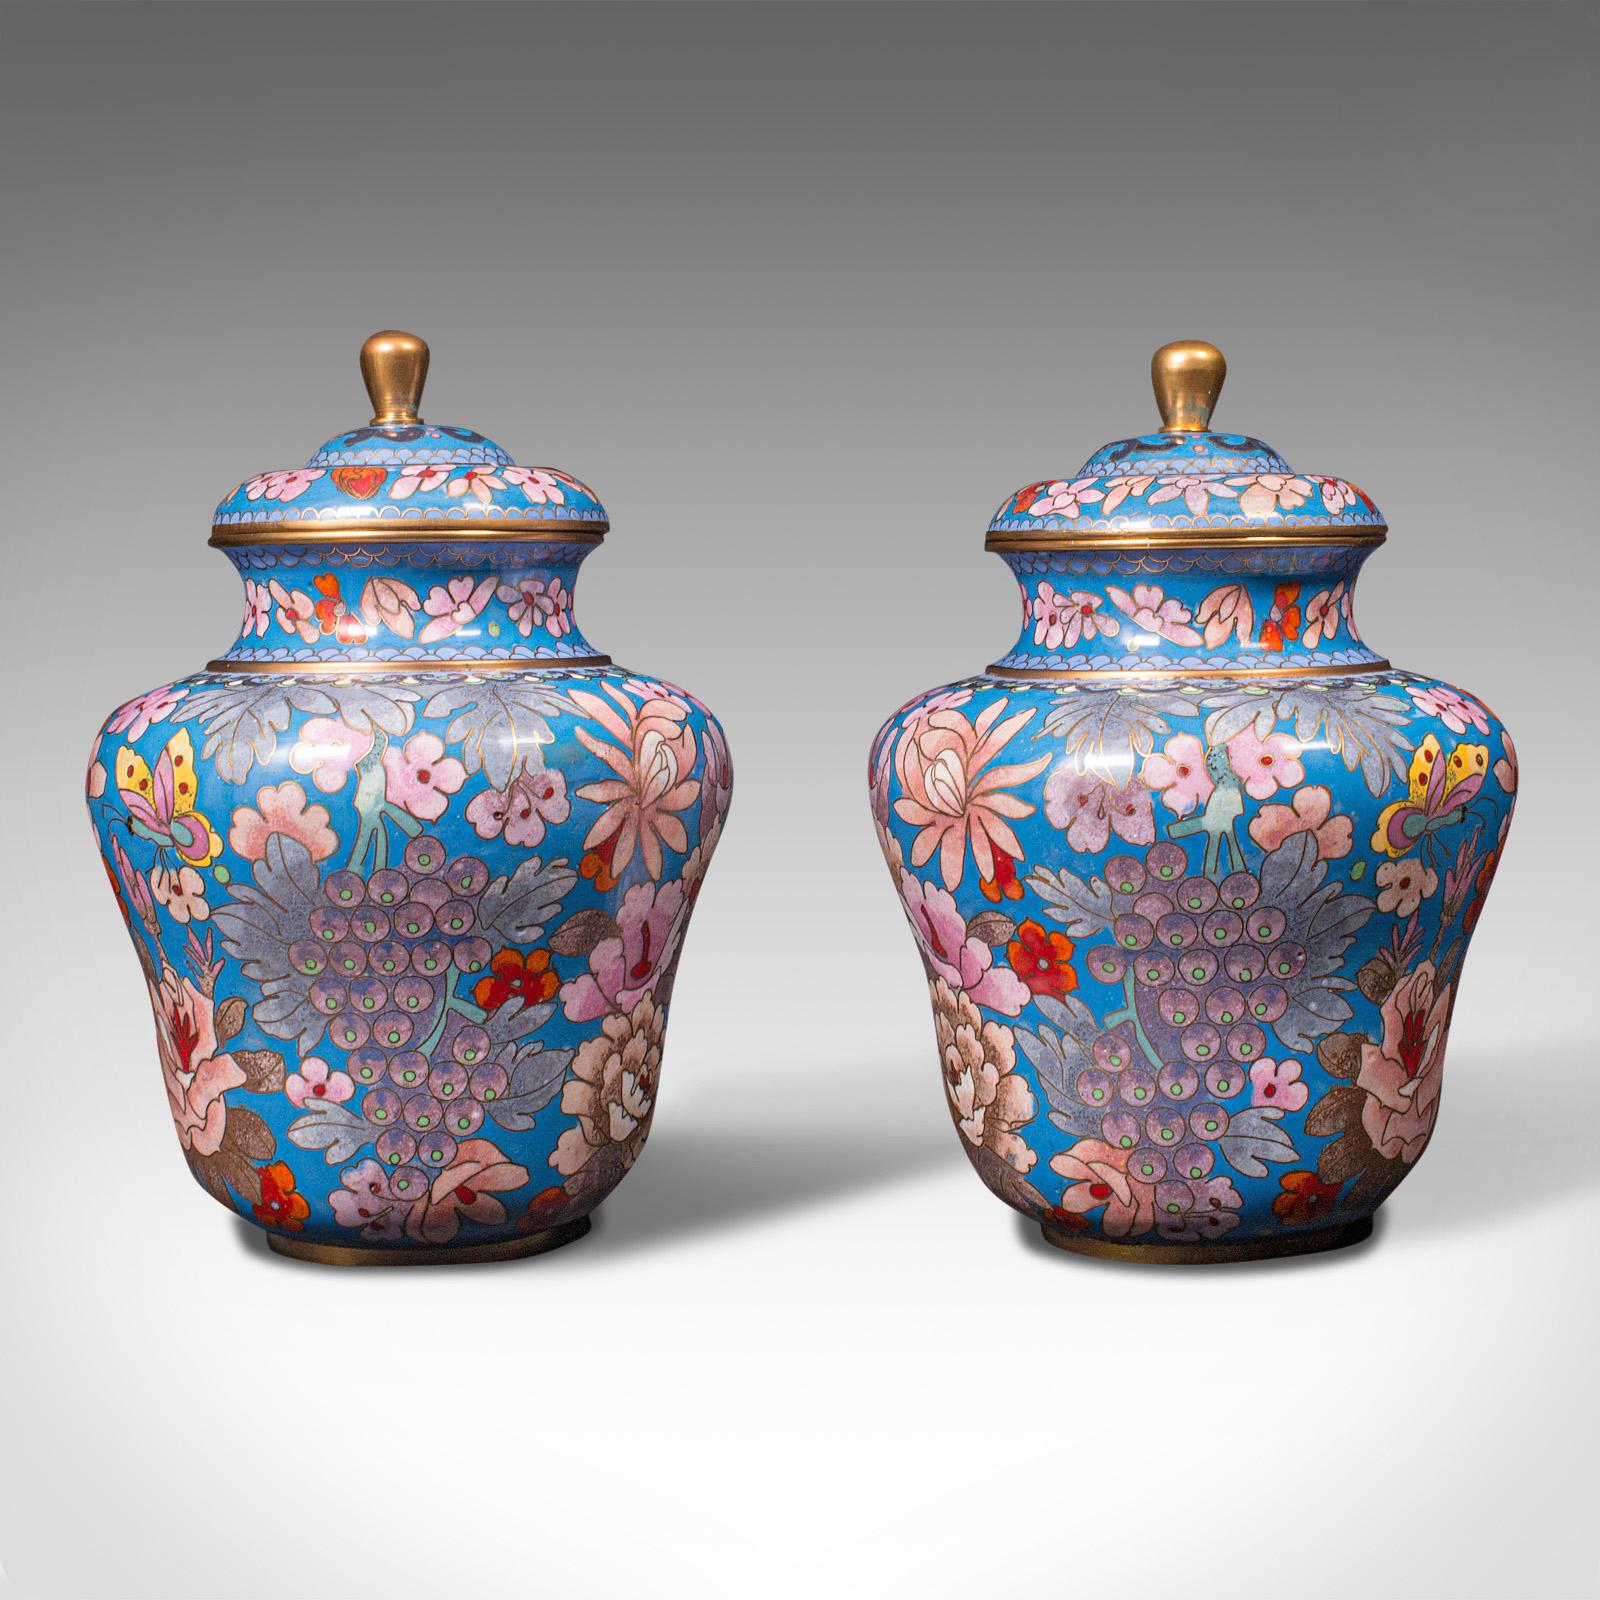 British Pair of Antique Cloisonne Spice Jars, English Ceramic, Decorative Pot, Victorian For Sale